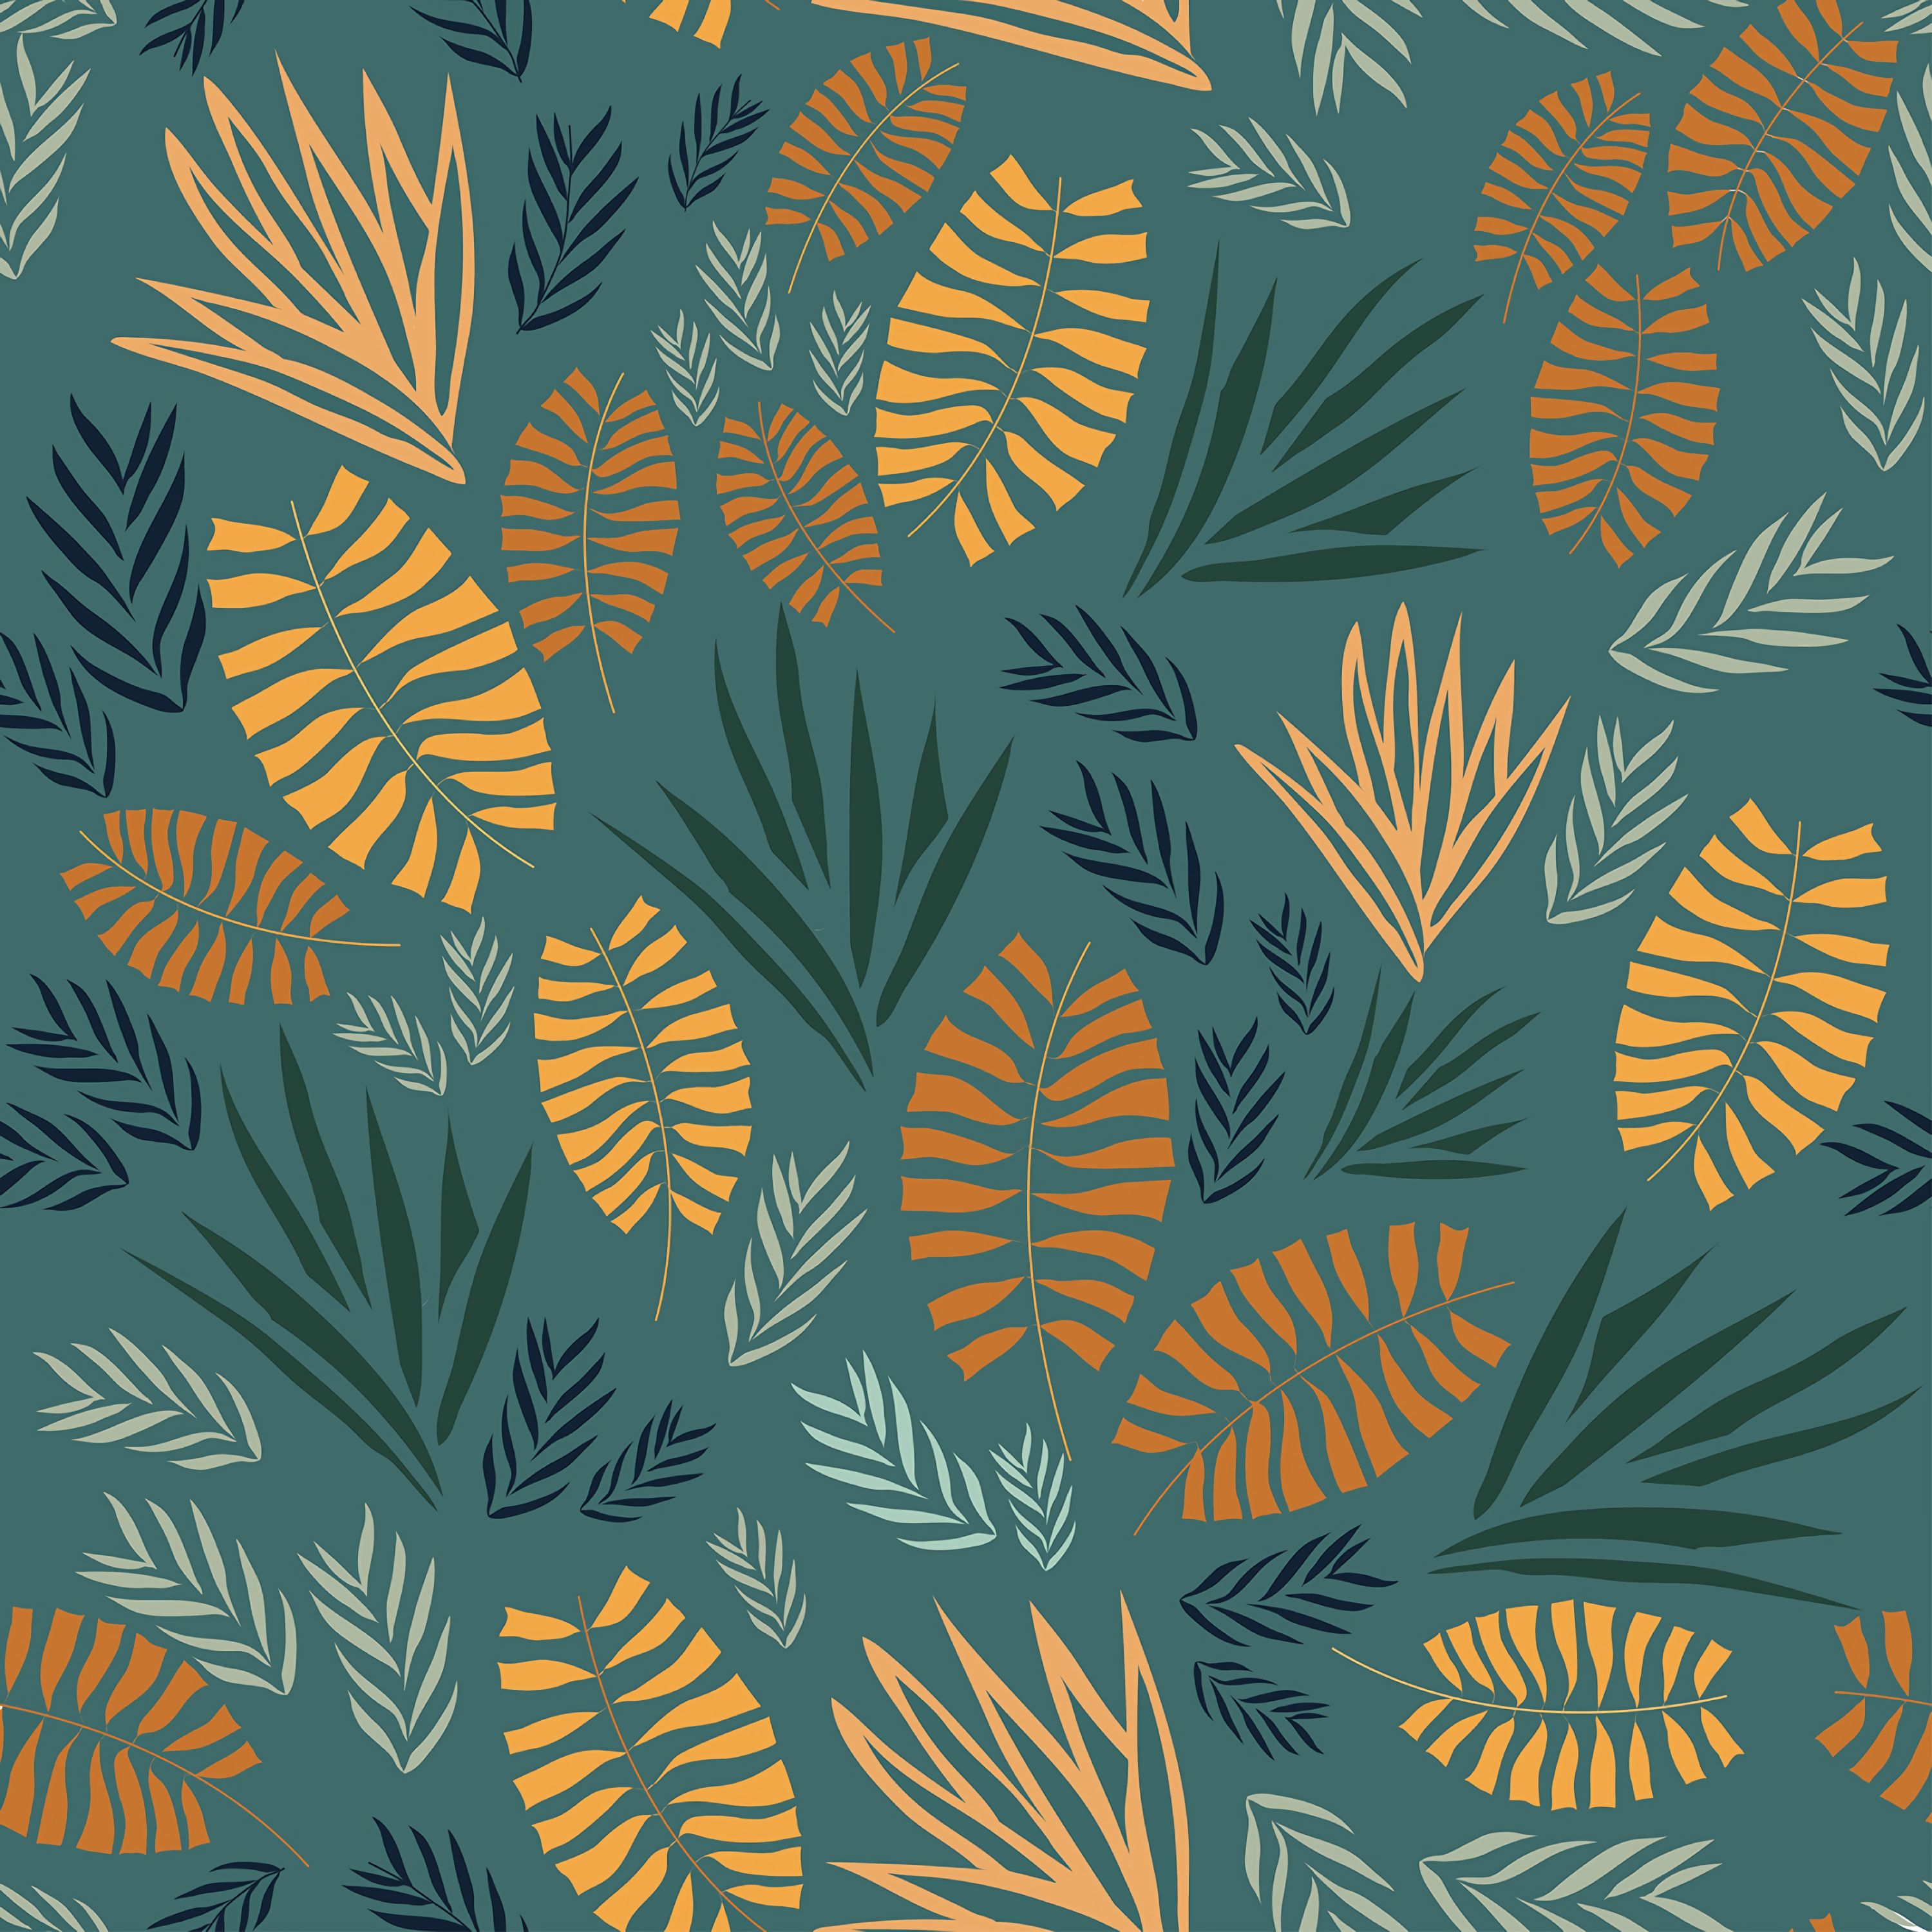 textures, pattern, patterns, texture, leaves, plants